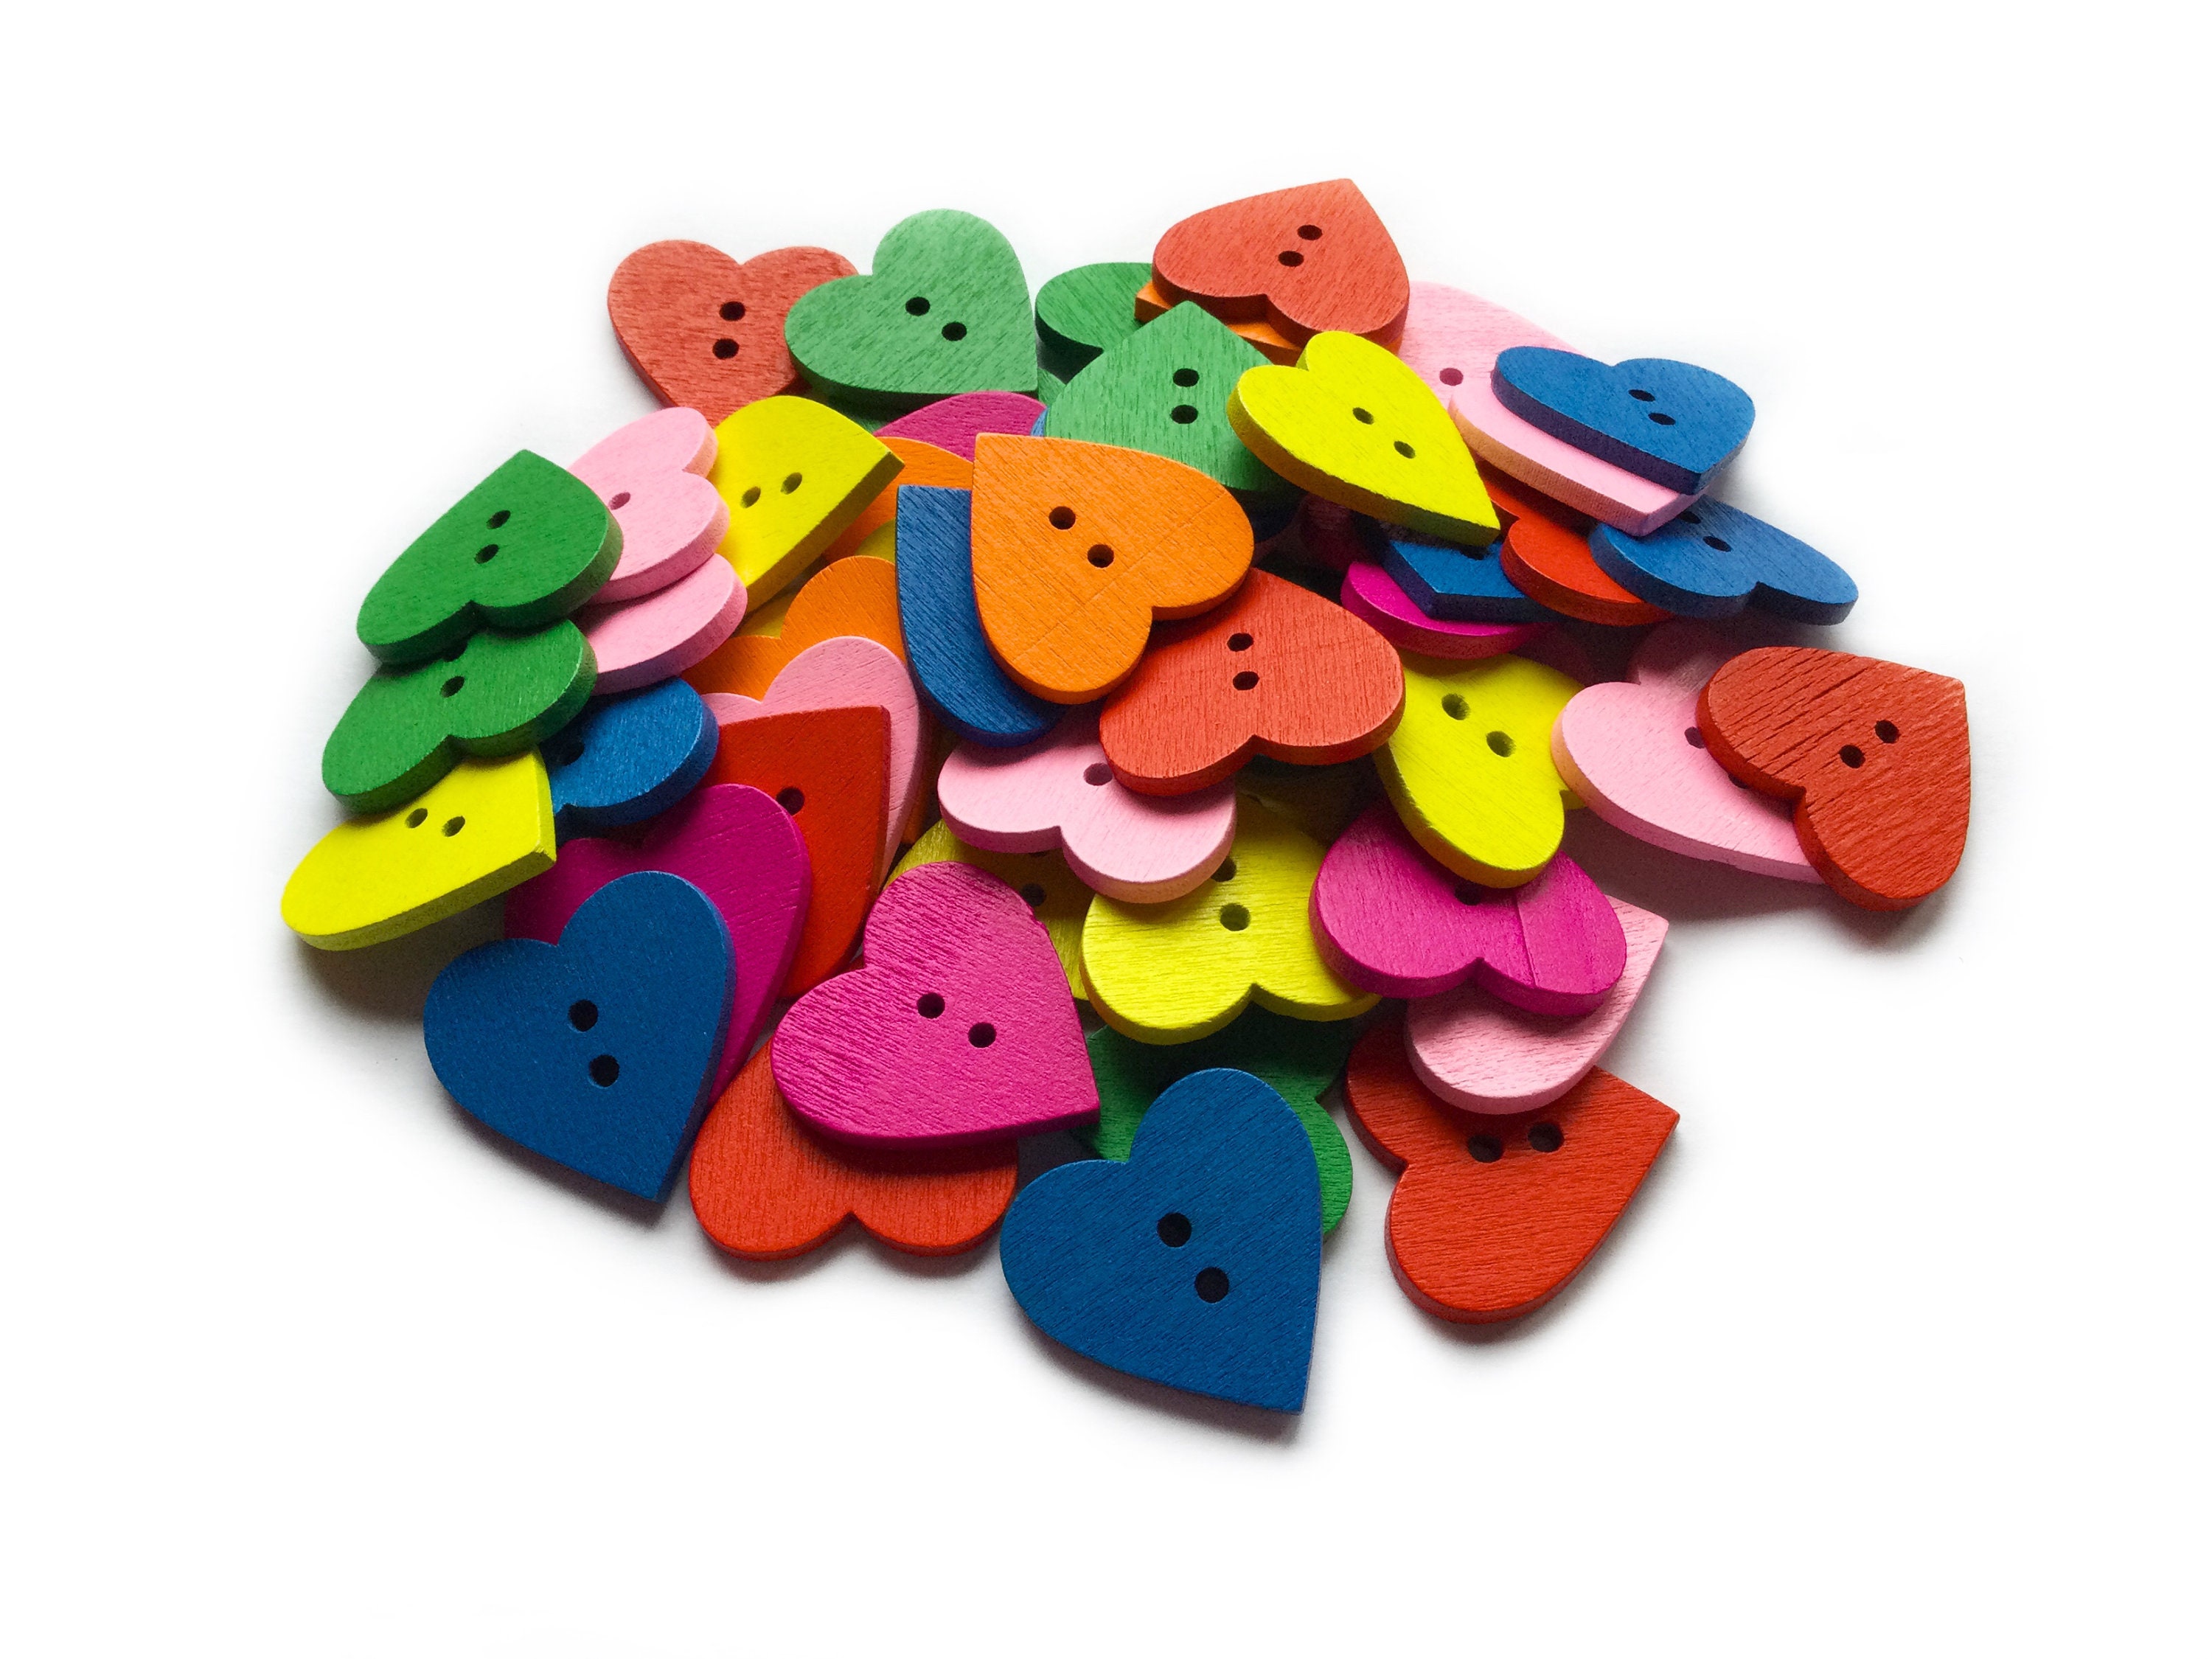 Heart Buttons - 8 pcs., Accessories